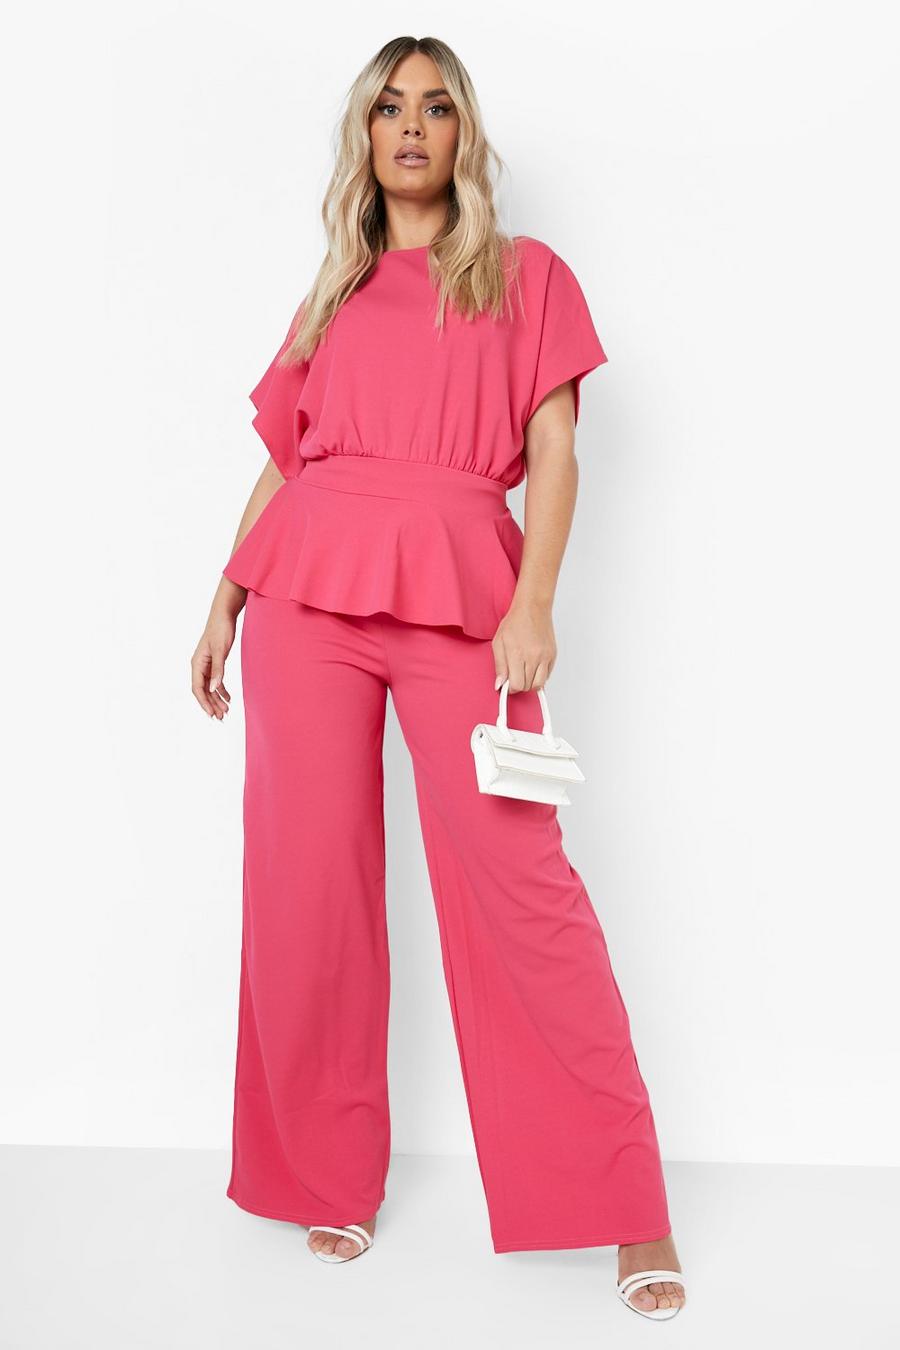 Hot pink סט תואם של טופ פפלום עם קשירה ומכנסיים בגזרה רחבה, מידות גדולות